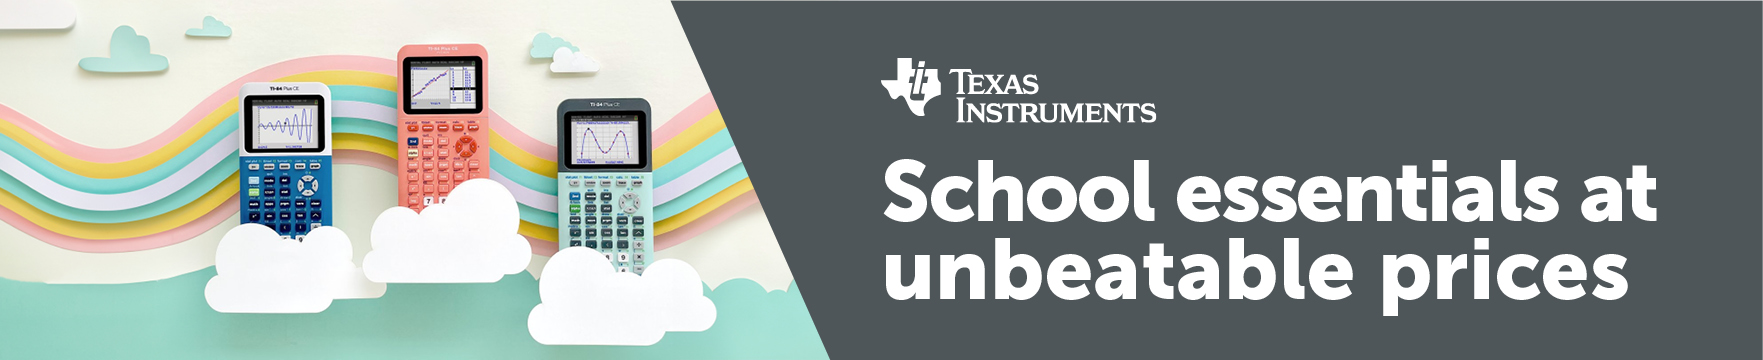 Texas Instruments. School essentials at unbeatable prices.